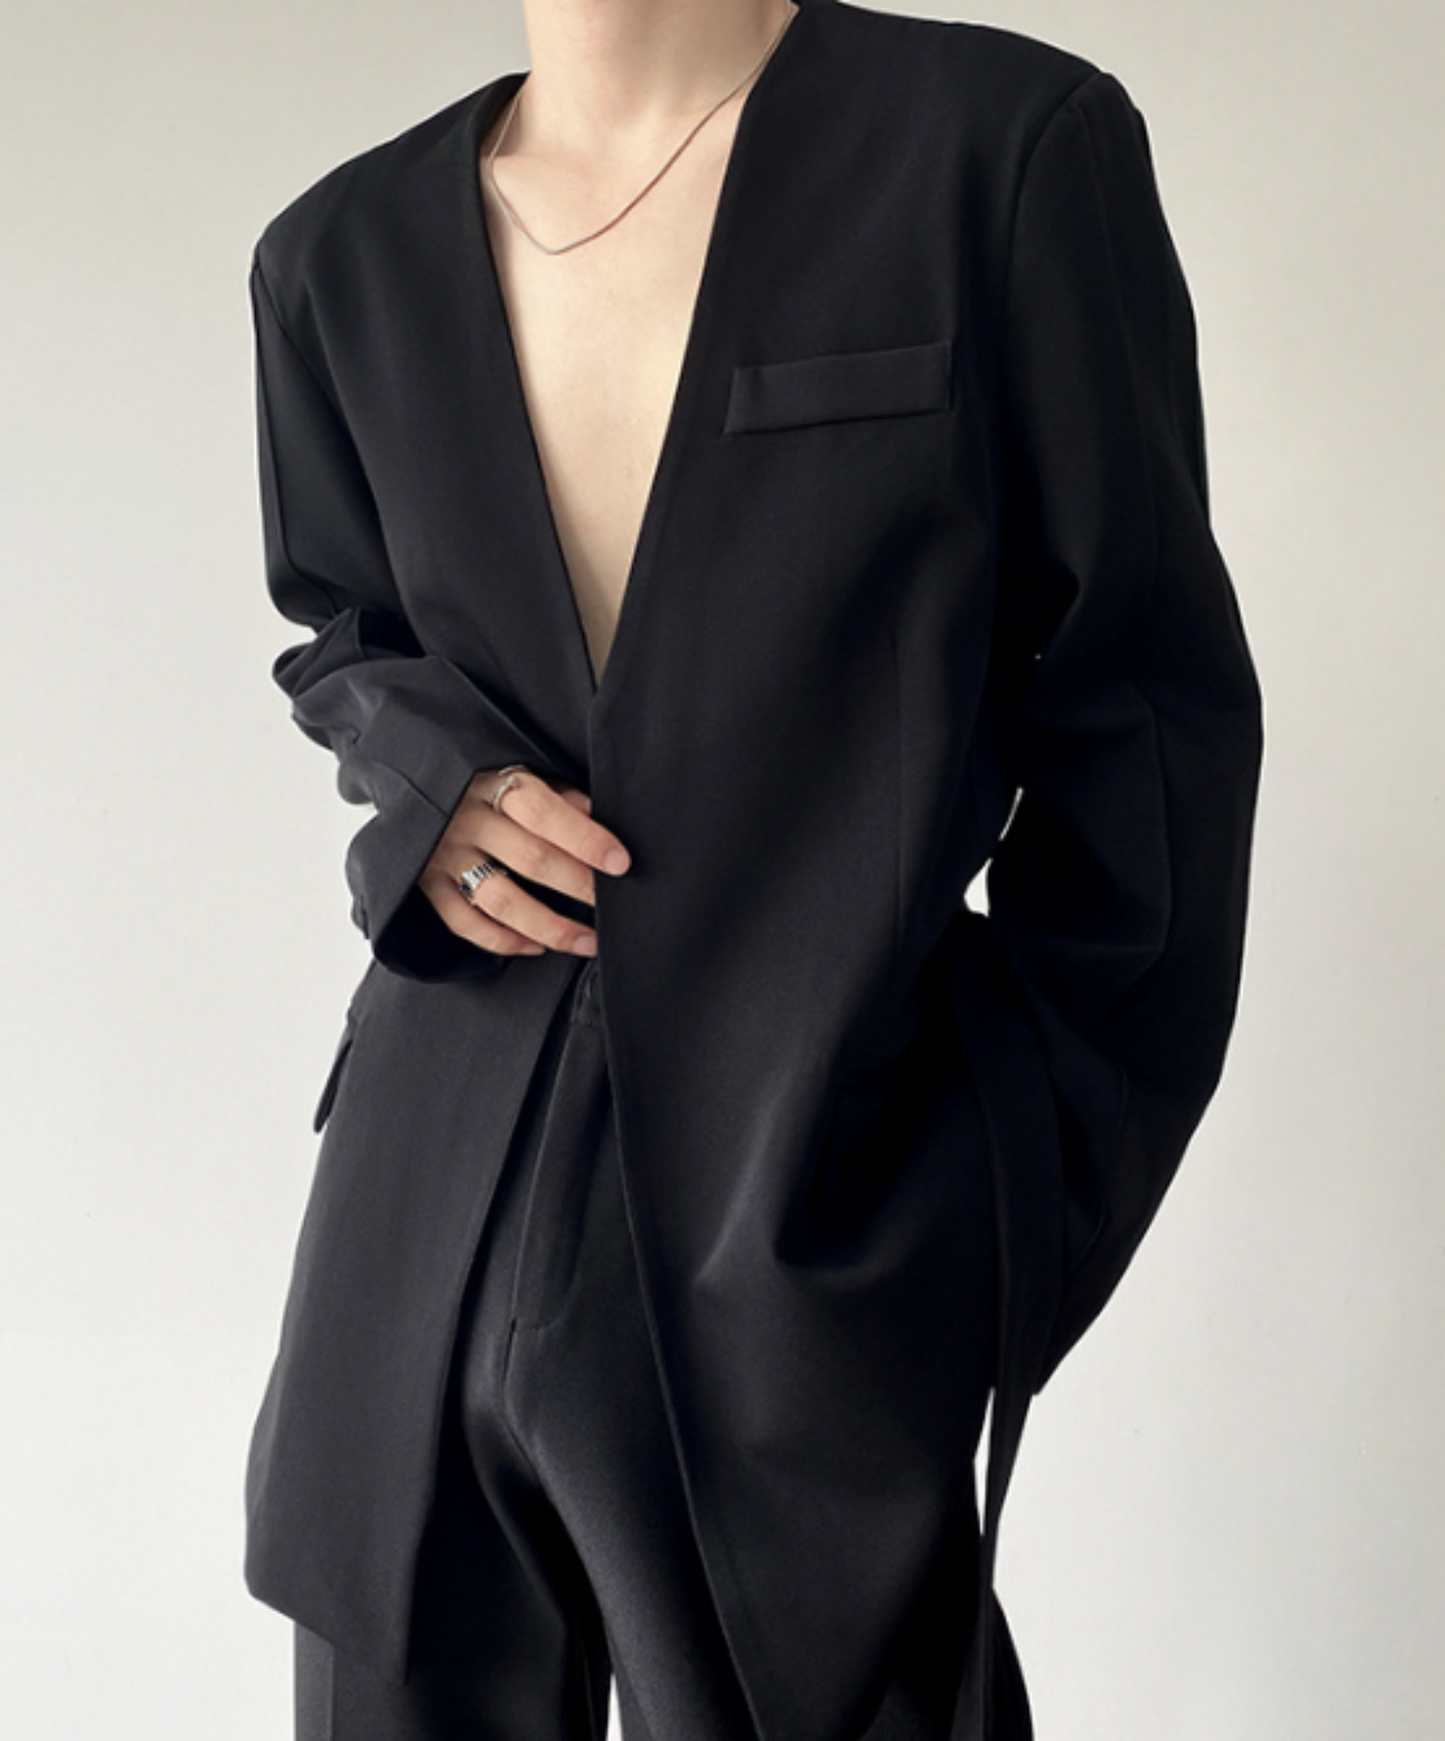 【style3】dark mode outfit set EN759（jacket + pants set）